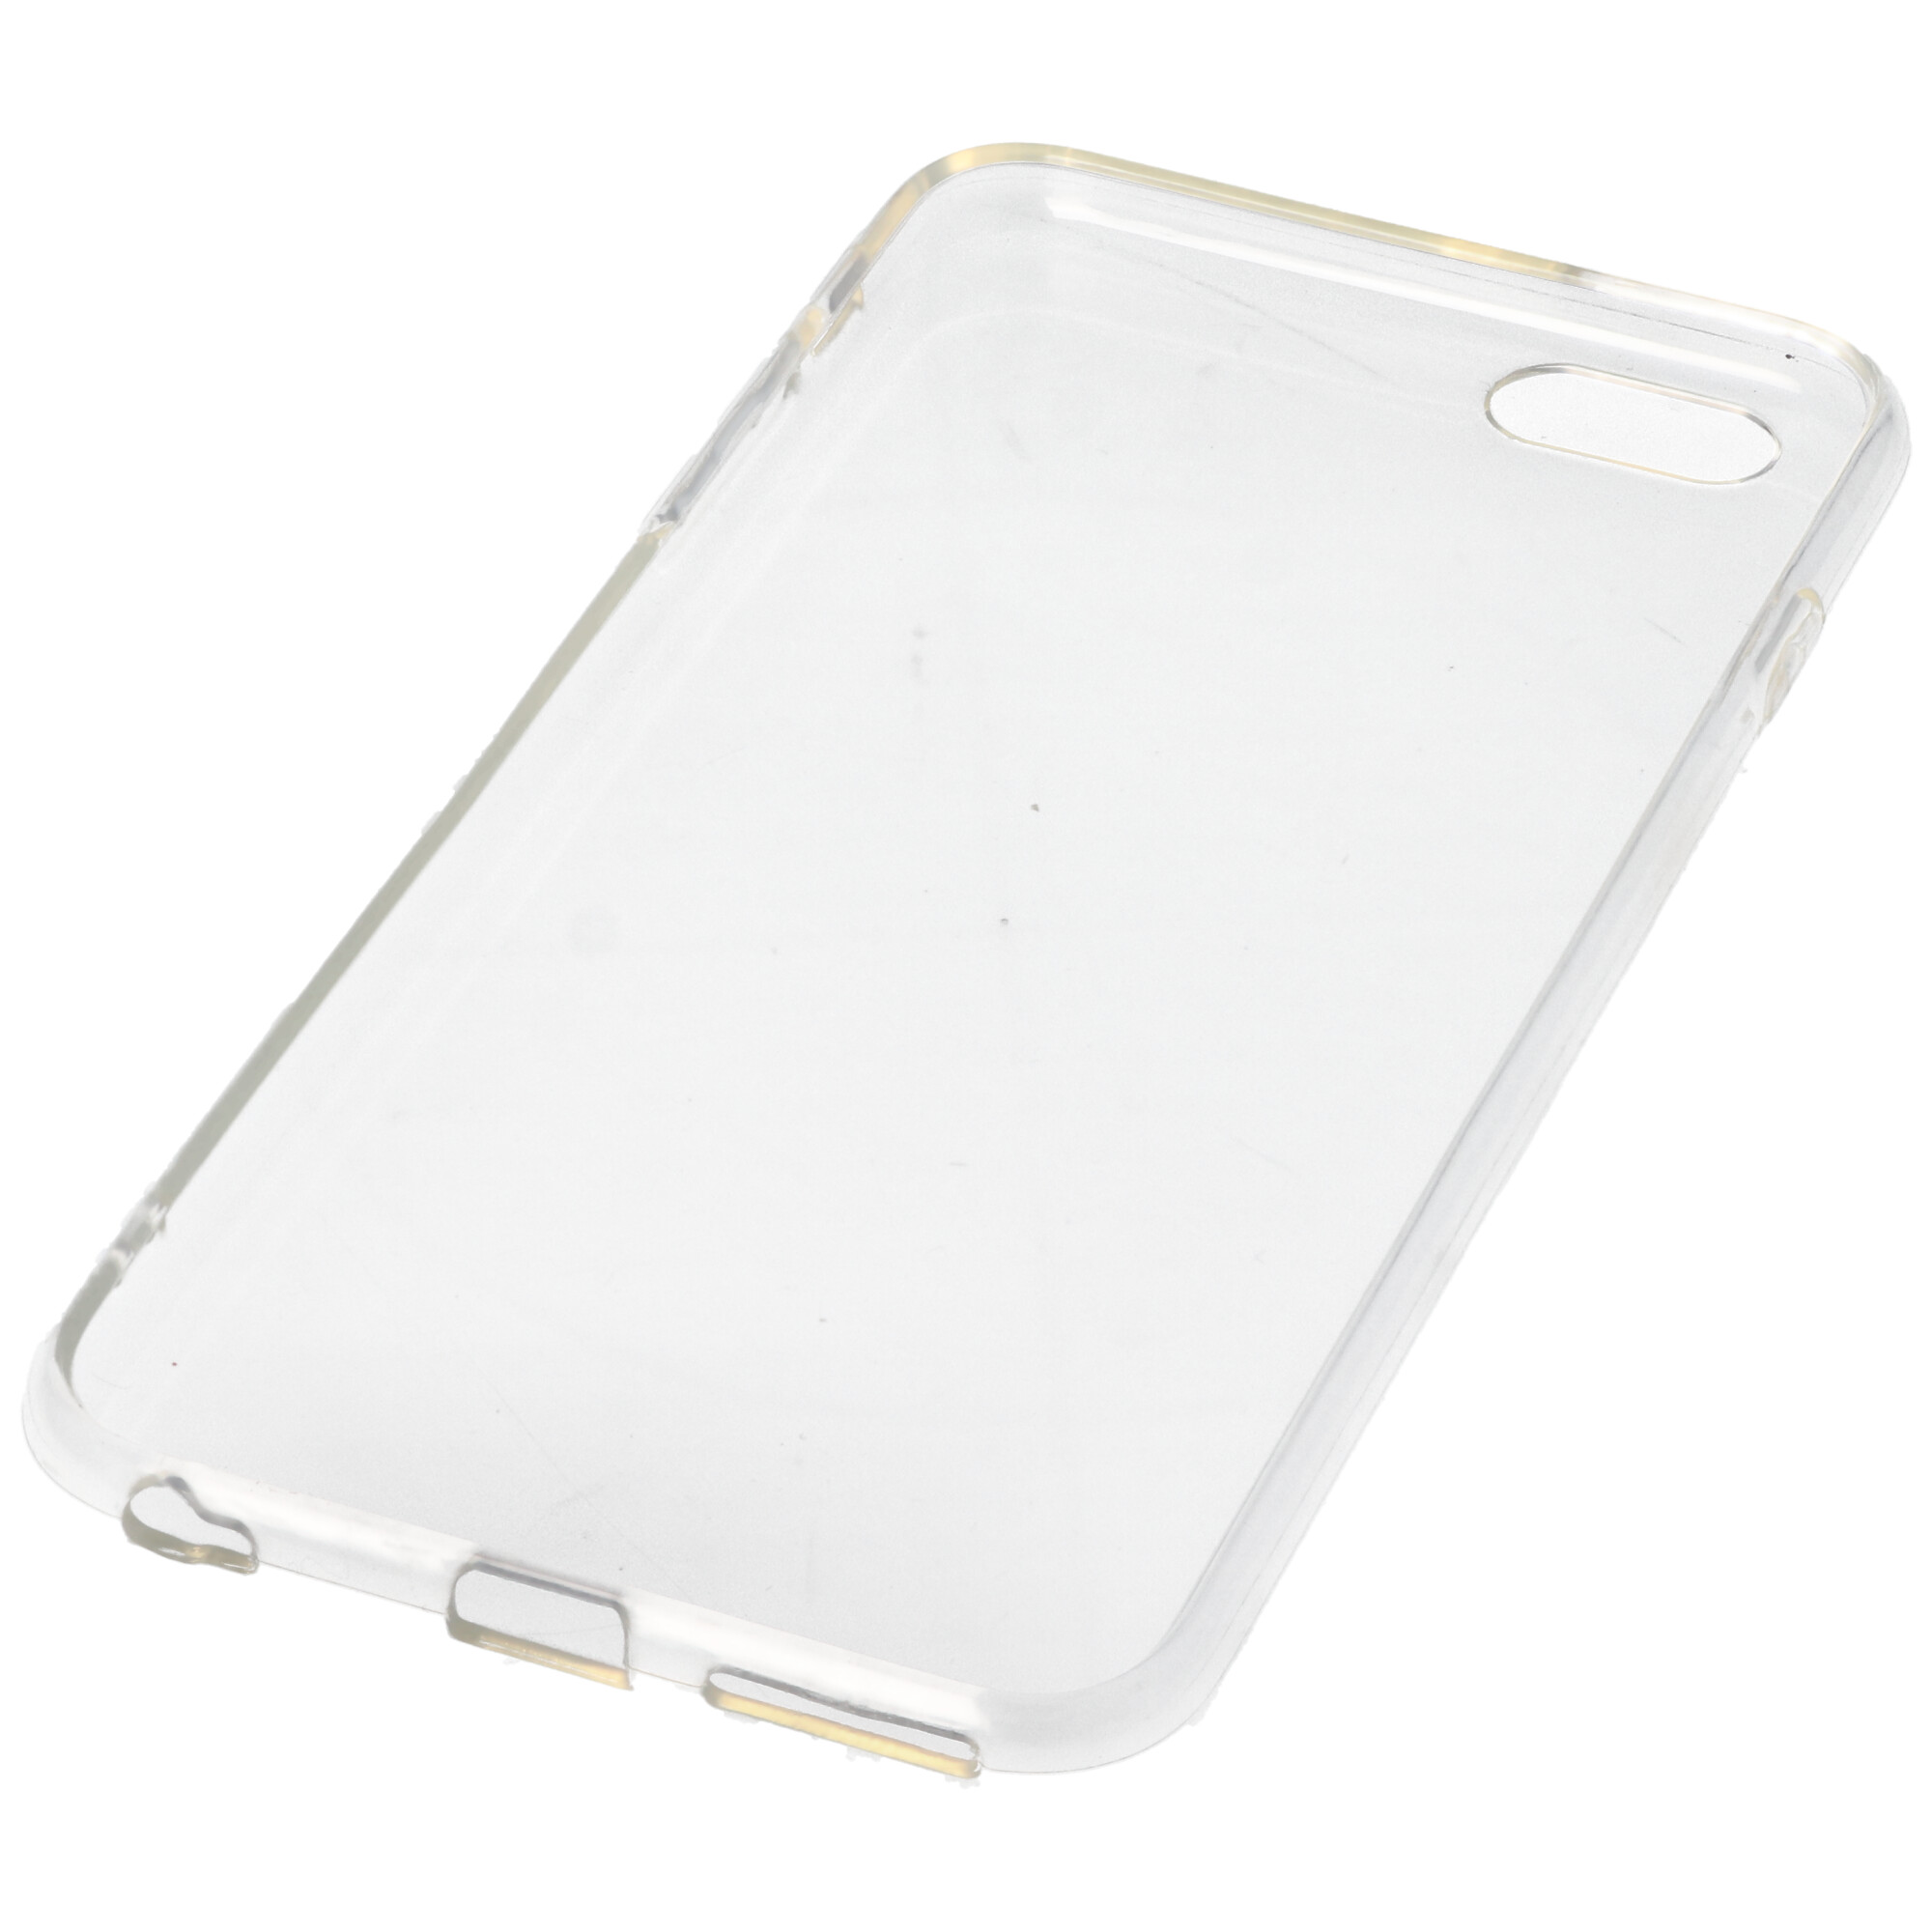 Hülle passend für Apple iPhone 6 Plus / iPhone 6S Plus - transparente Schutzhülle, Anti-Gelb Luftkissen Fallschutz Silikon Handyhülle robustes TPU Case